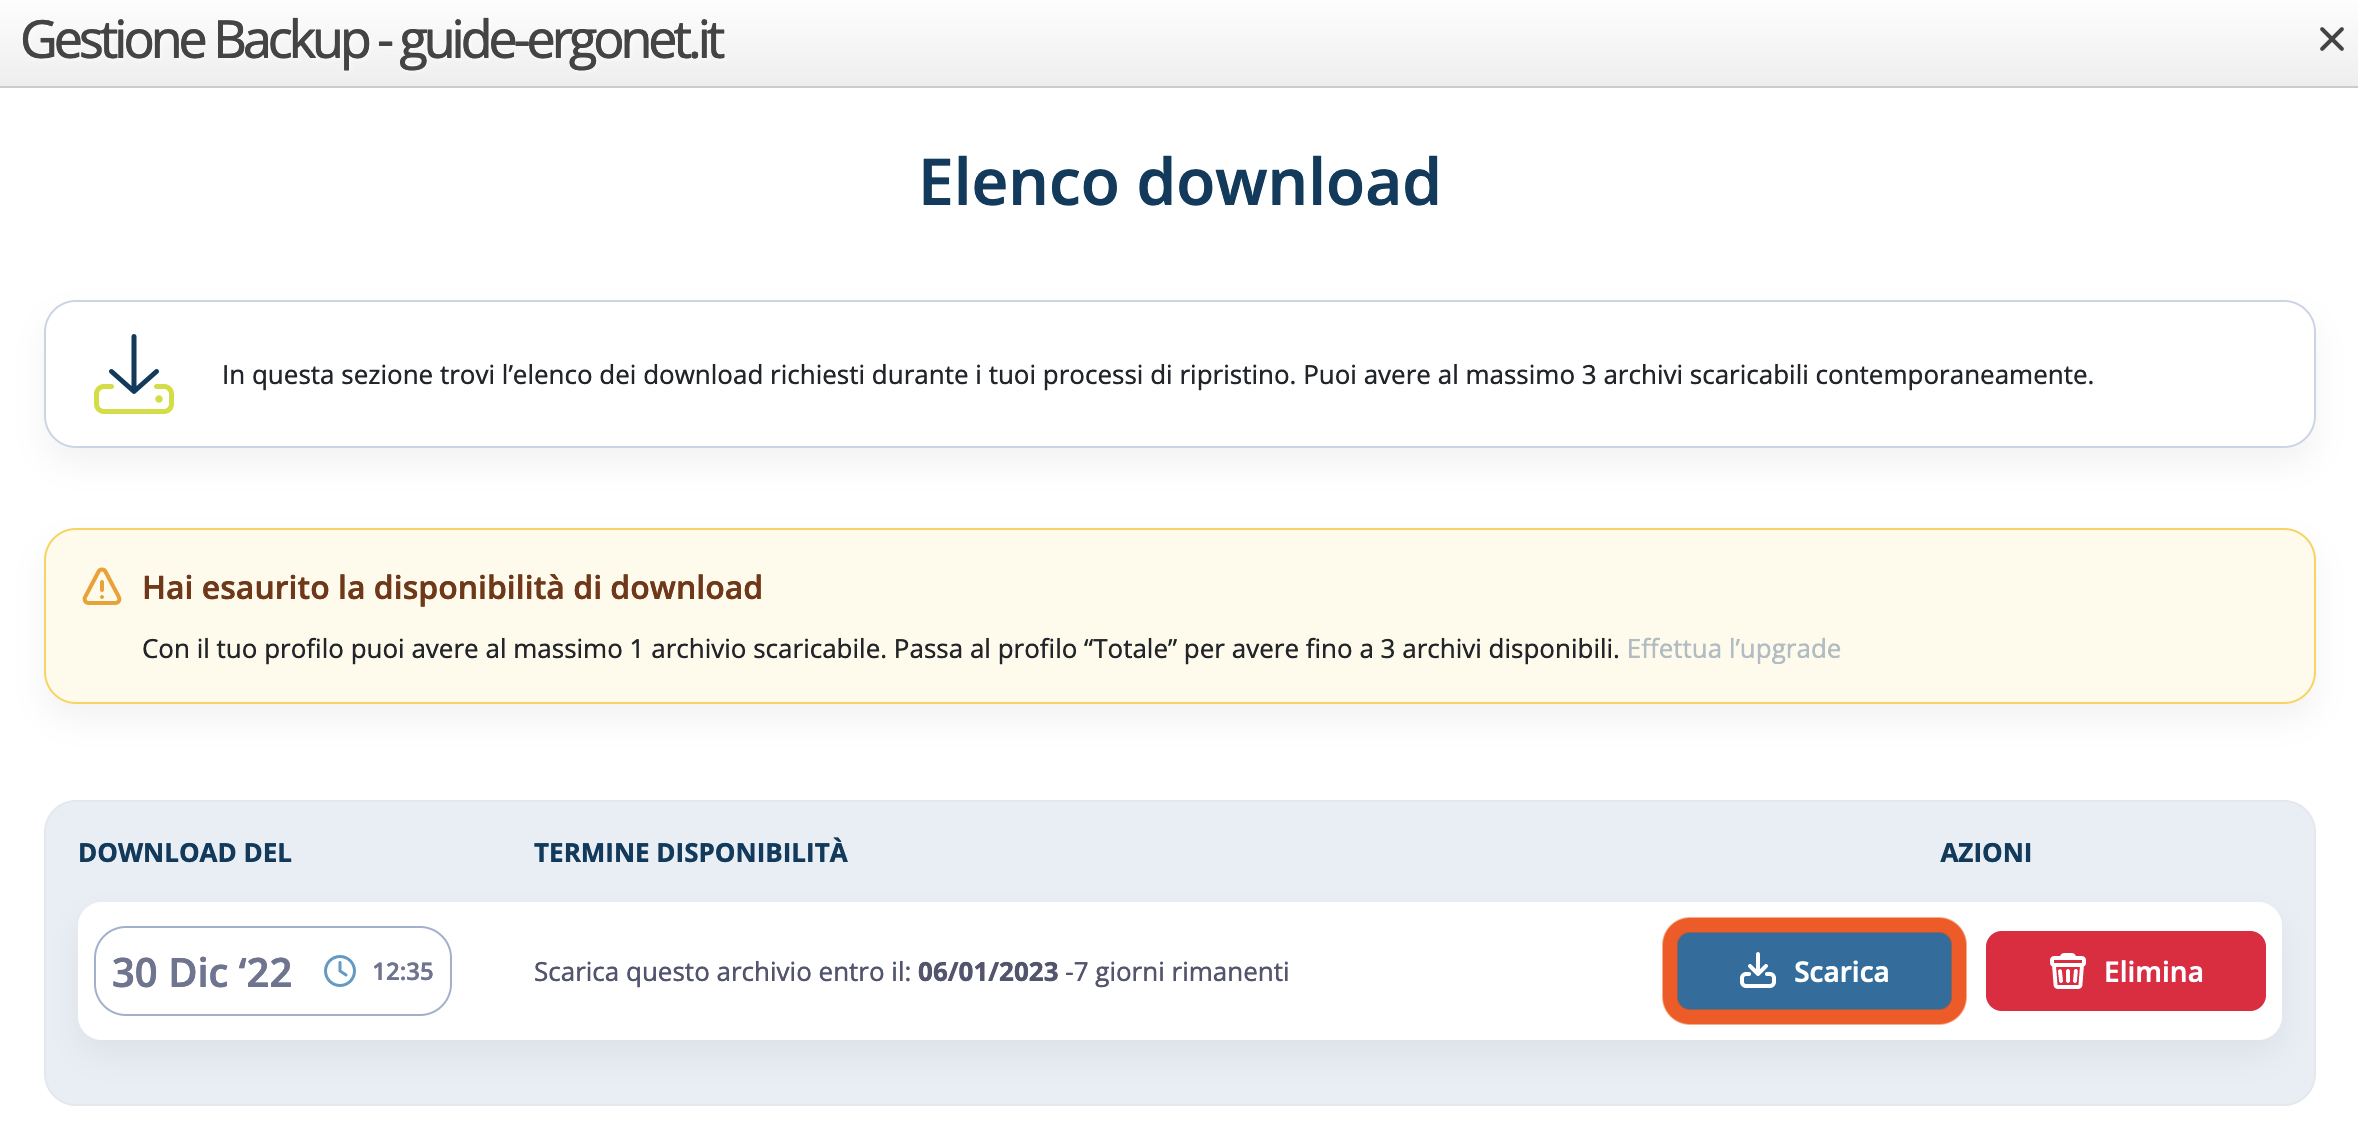 WebPanel Ergonet - Download archivio backup